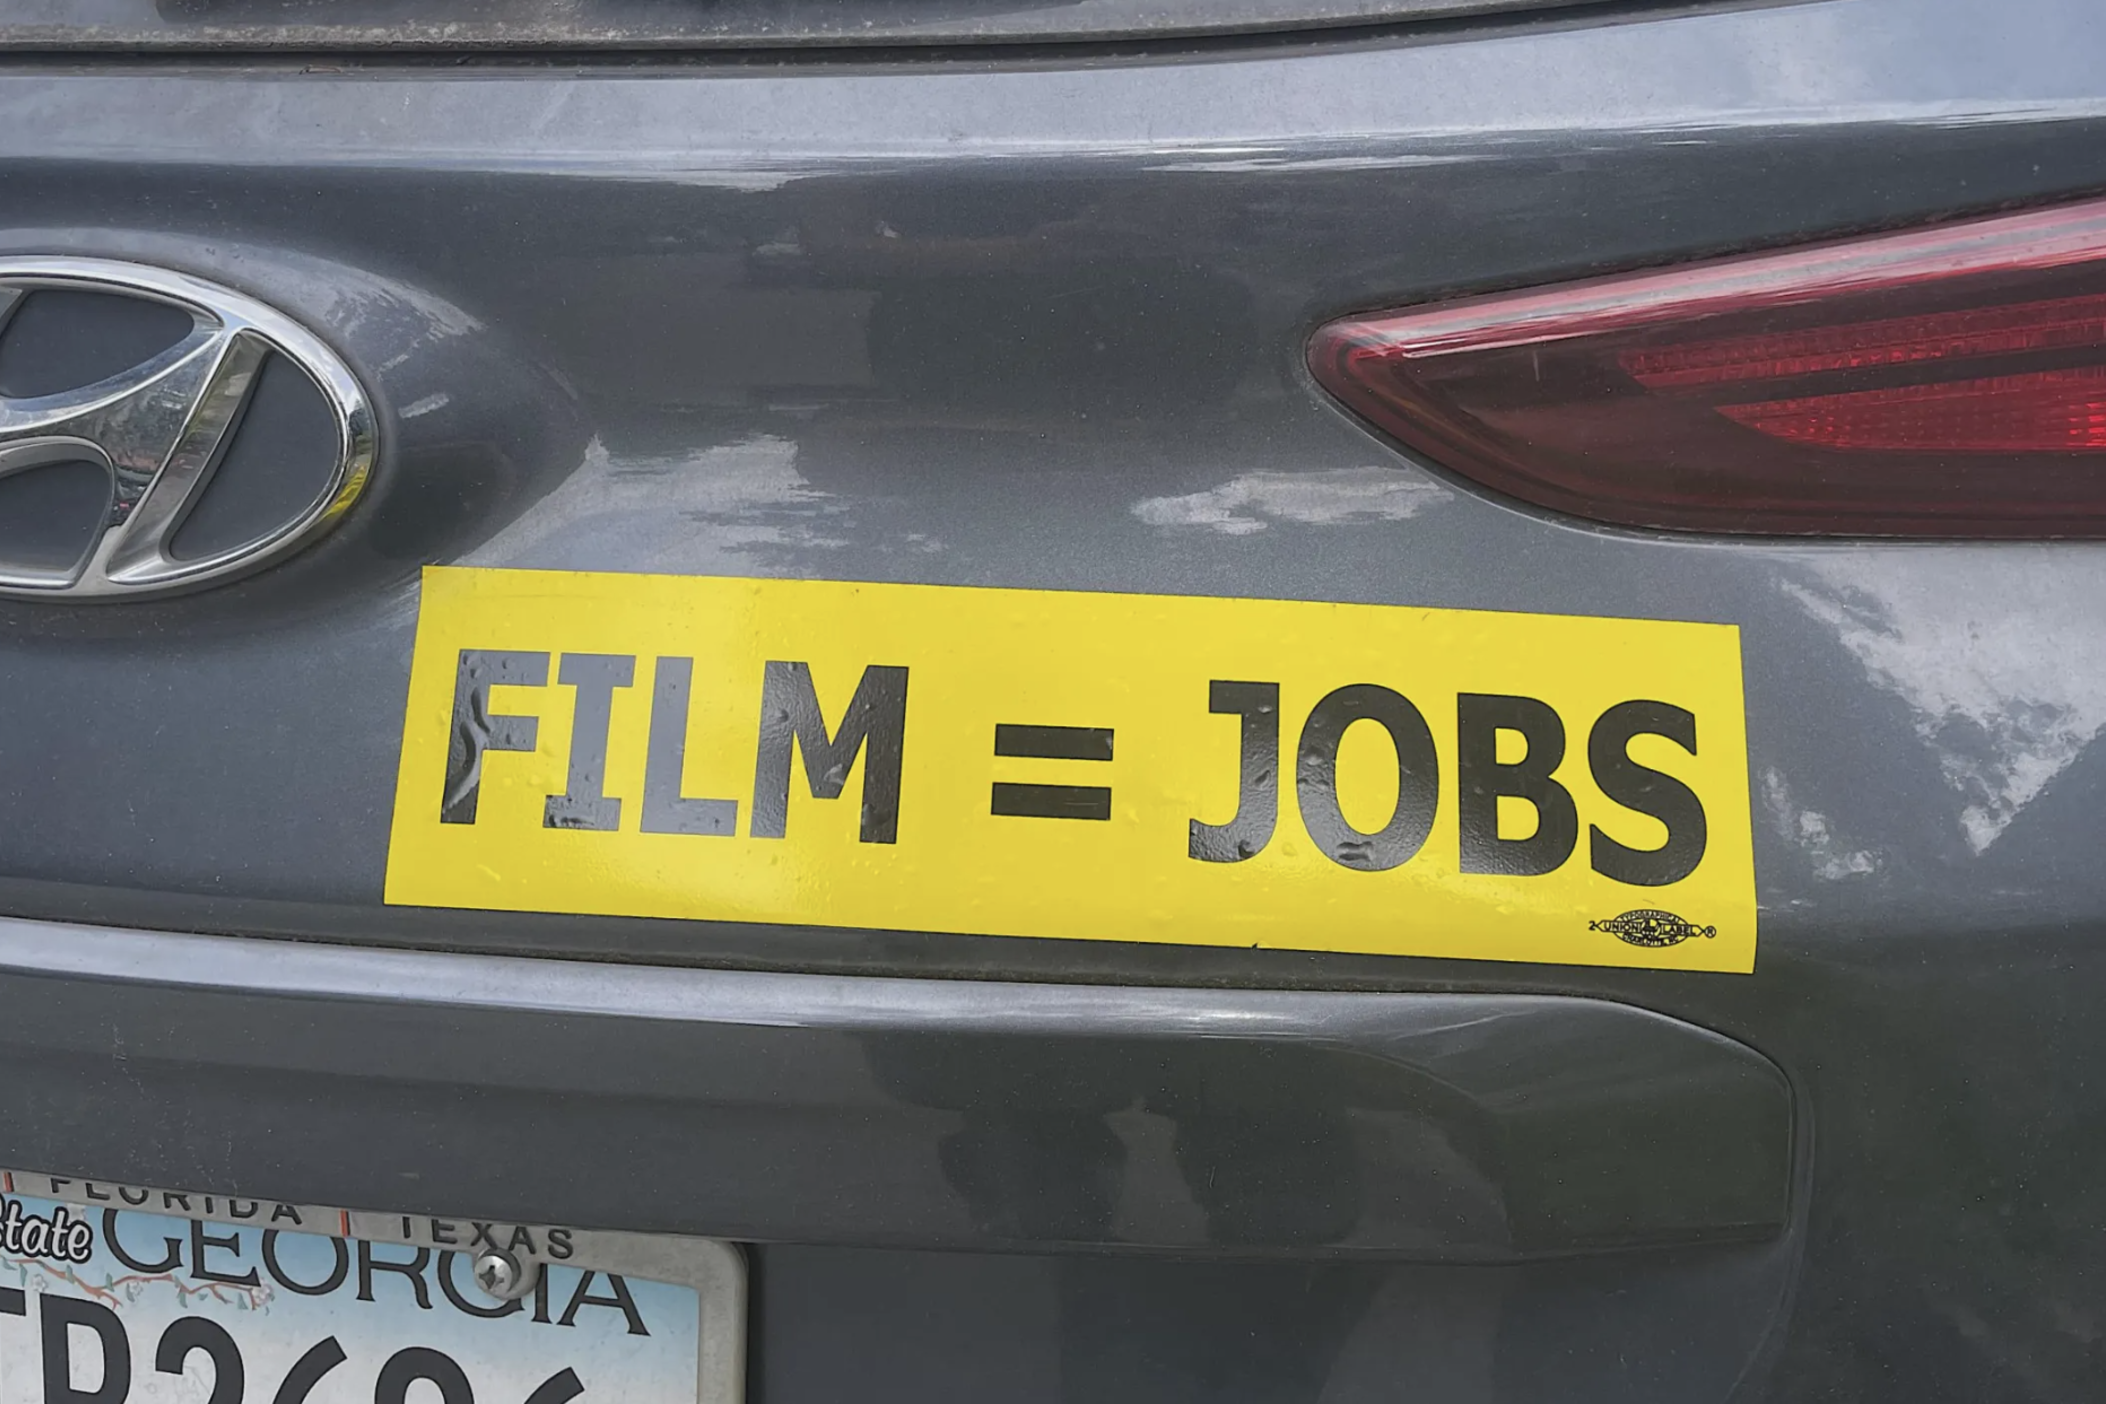 A bumper sticker on a car in Savannah promotes Georgia's film industry.